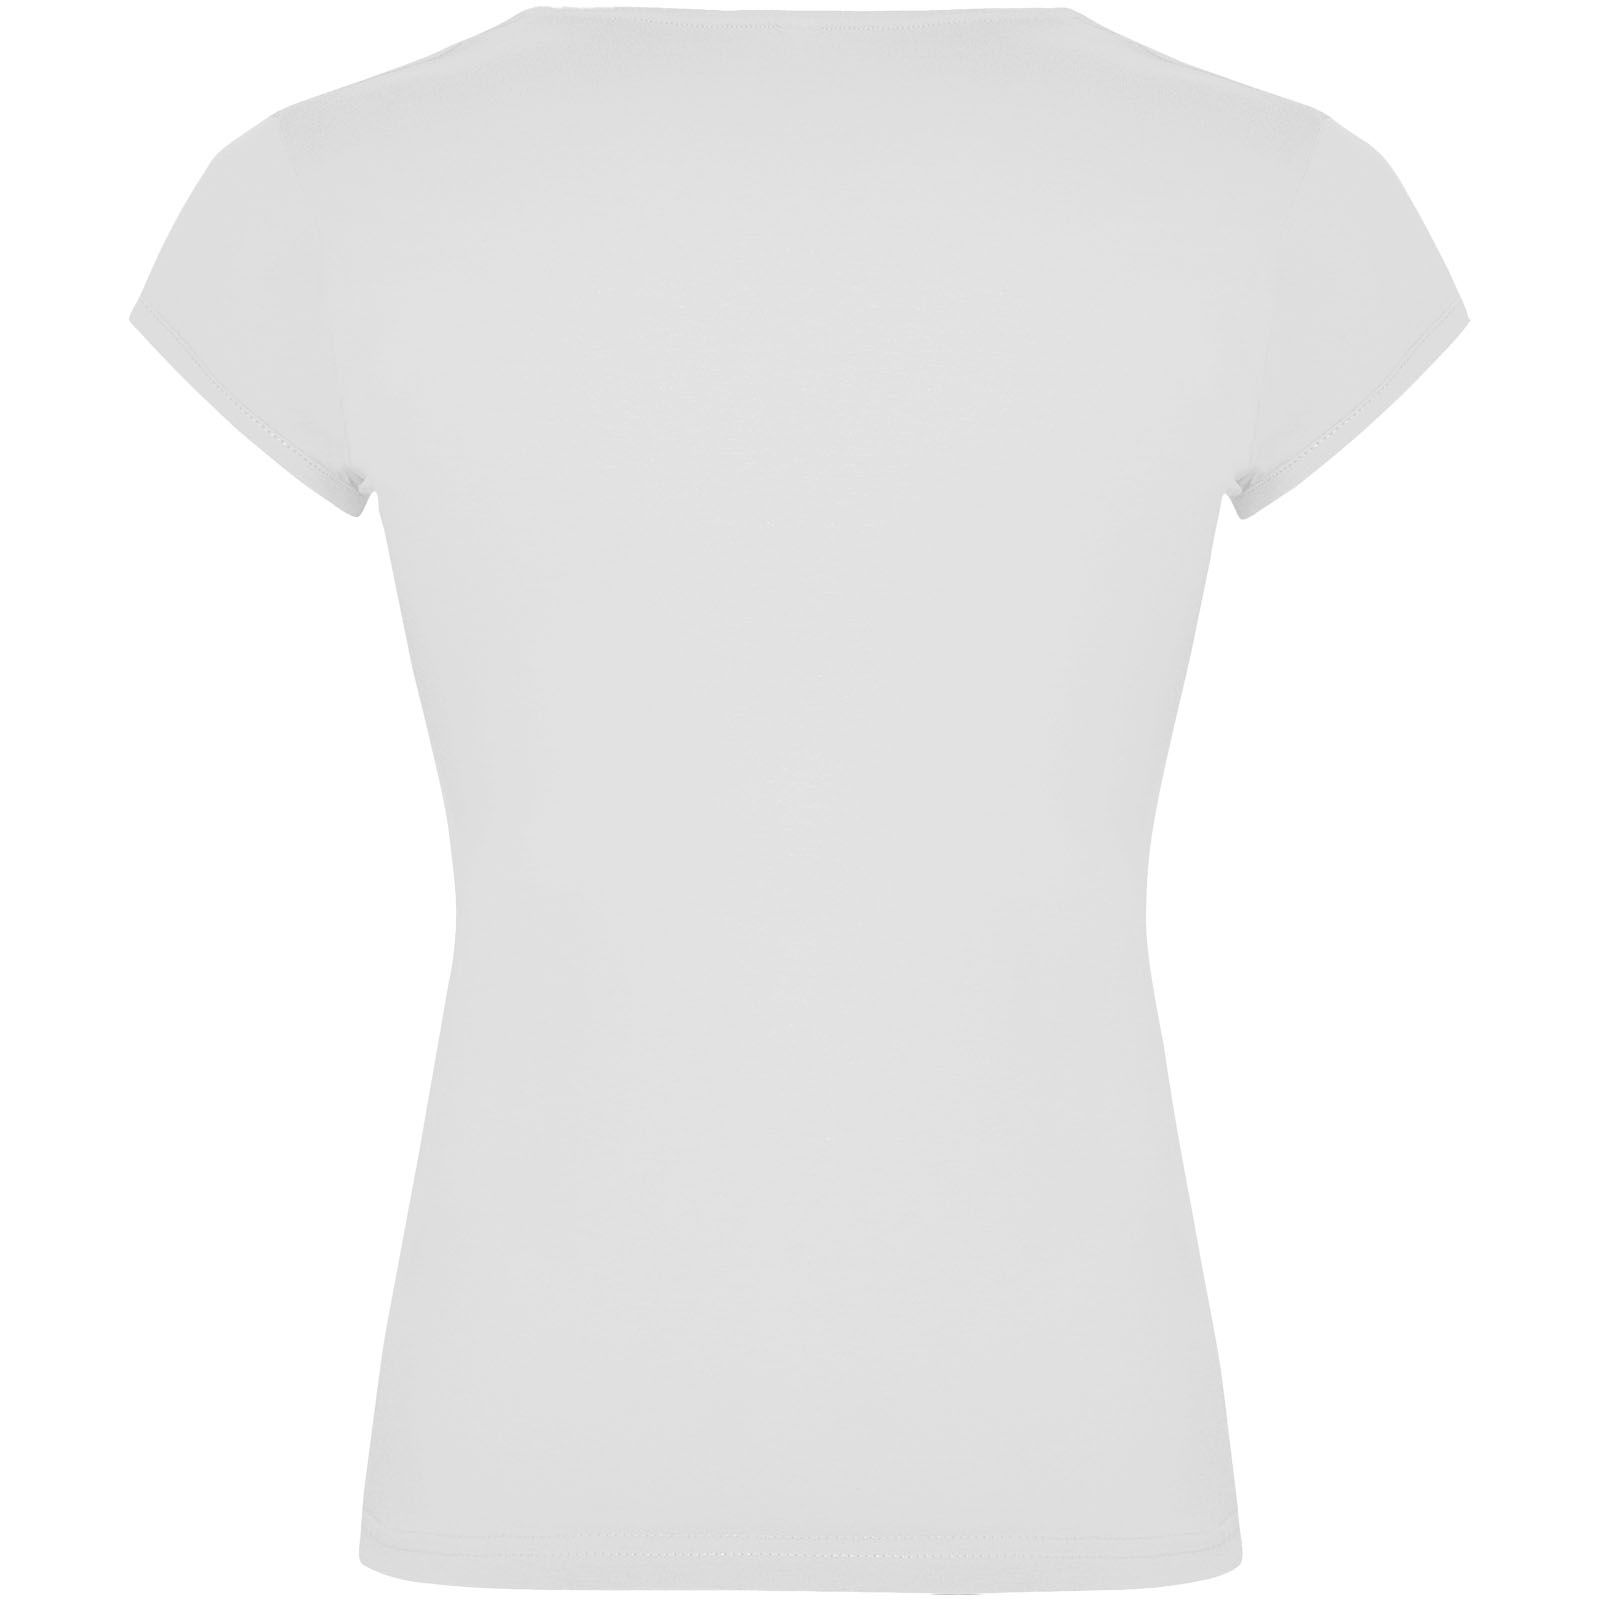 Advertising T-shirts - Belice short sleeve women's t-shirt - 1